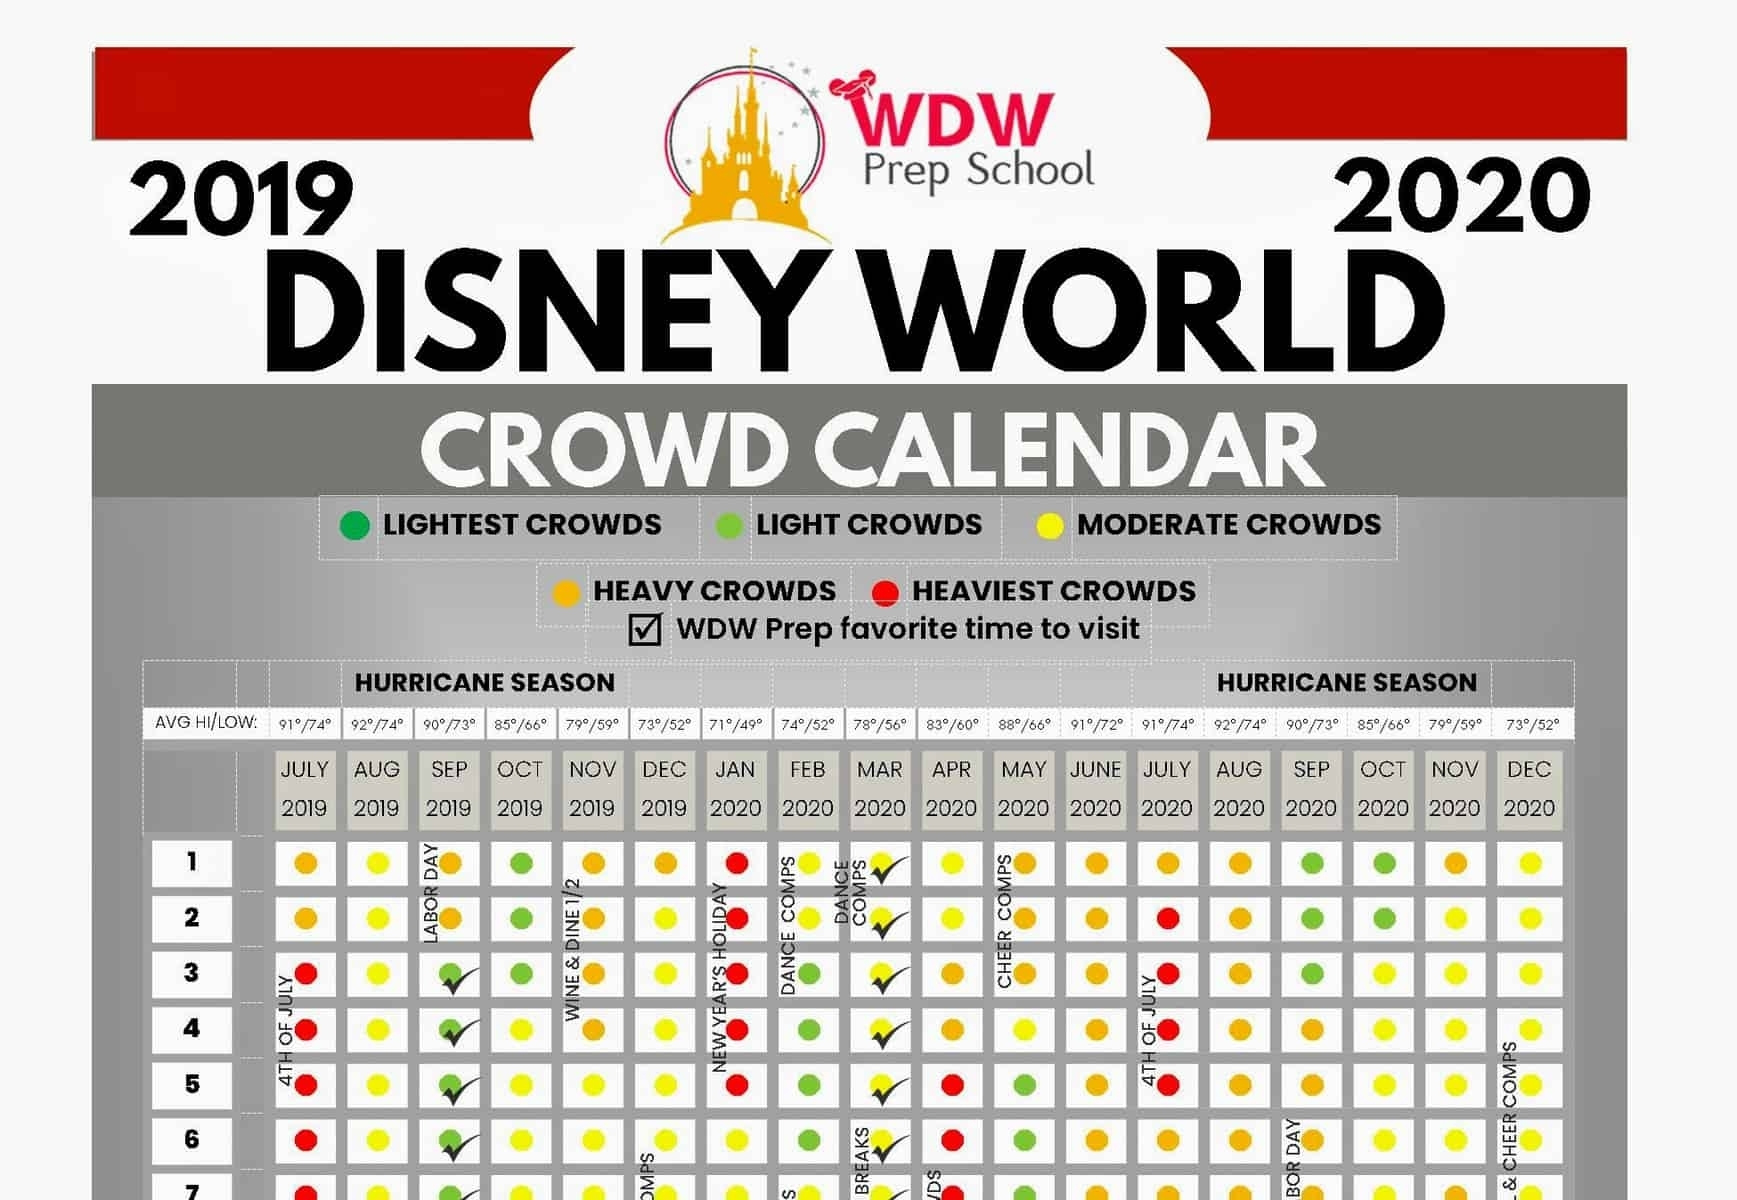 Disney World Crowd Calendar December 2020 | Avnitasoni Disney World November 2021 Crowd Calendar